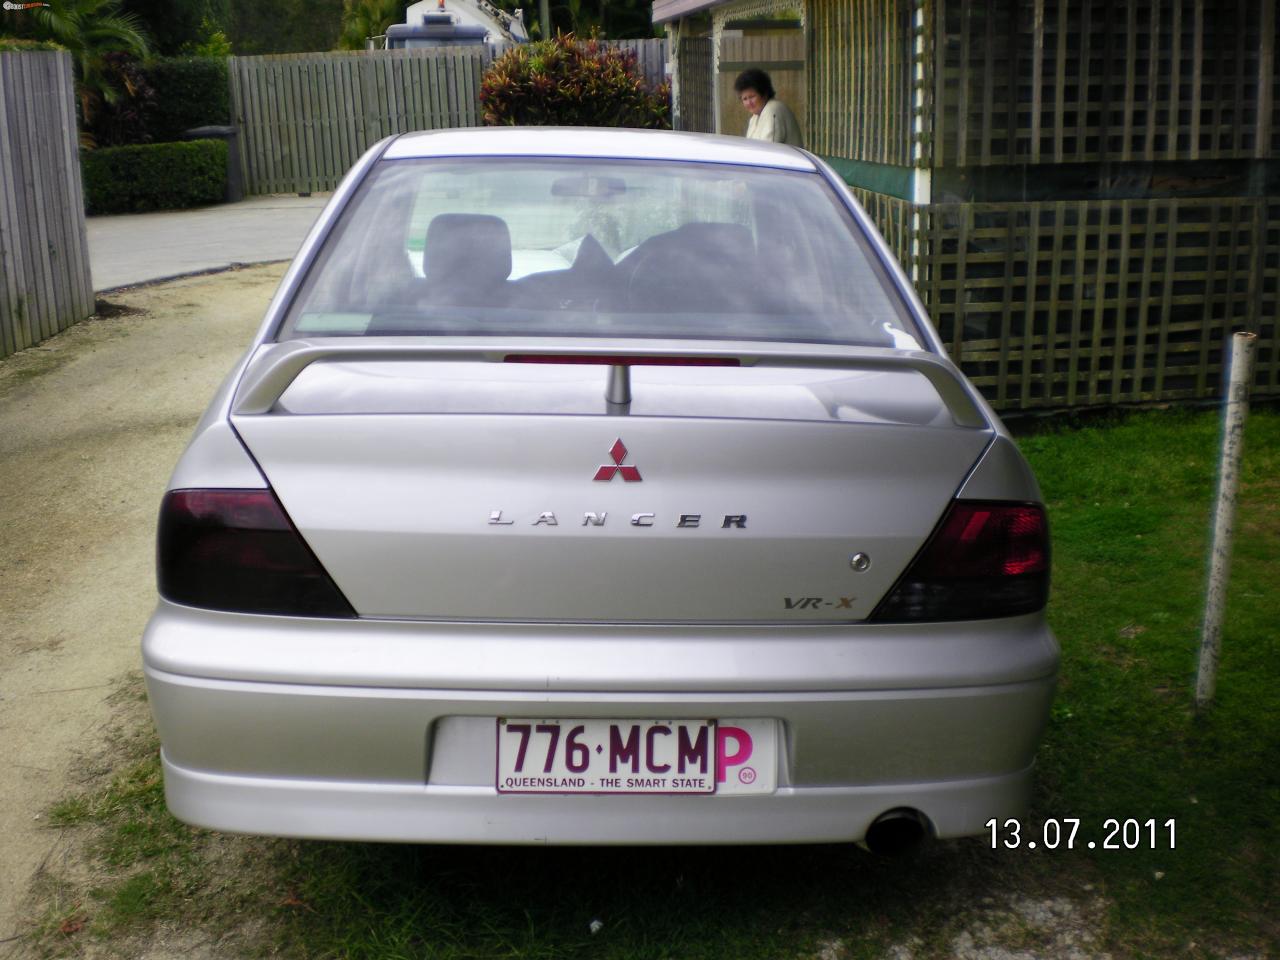 2003 Mitsubishi Lancer Cs Vr-x